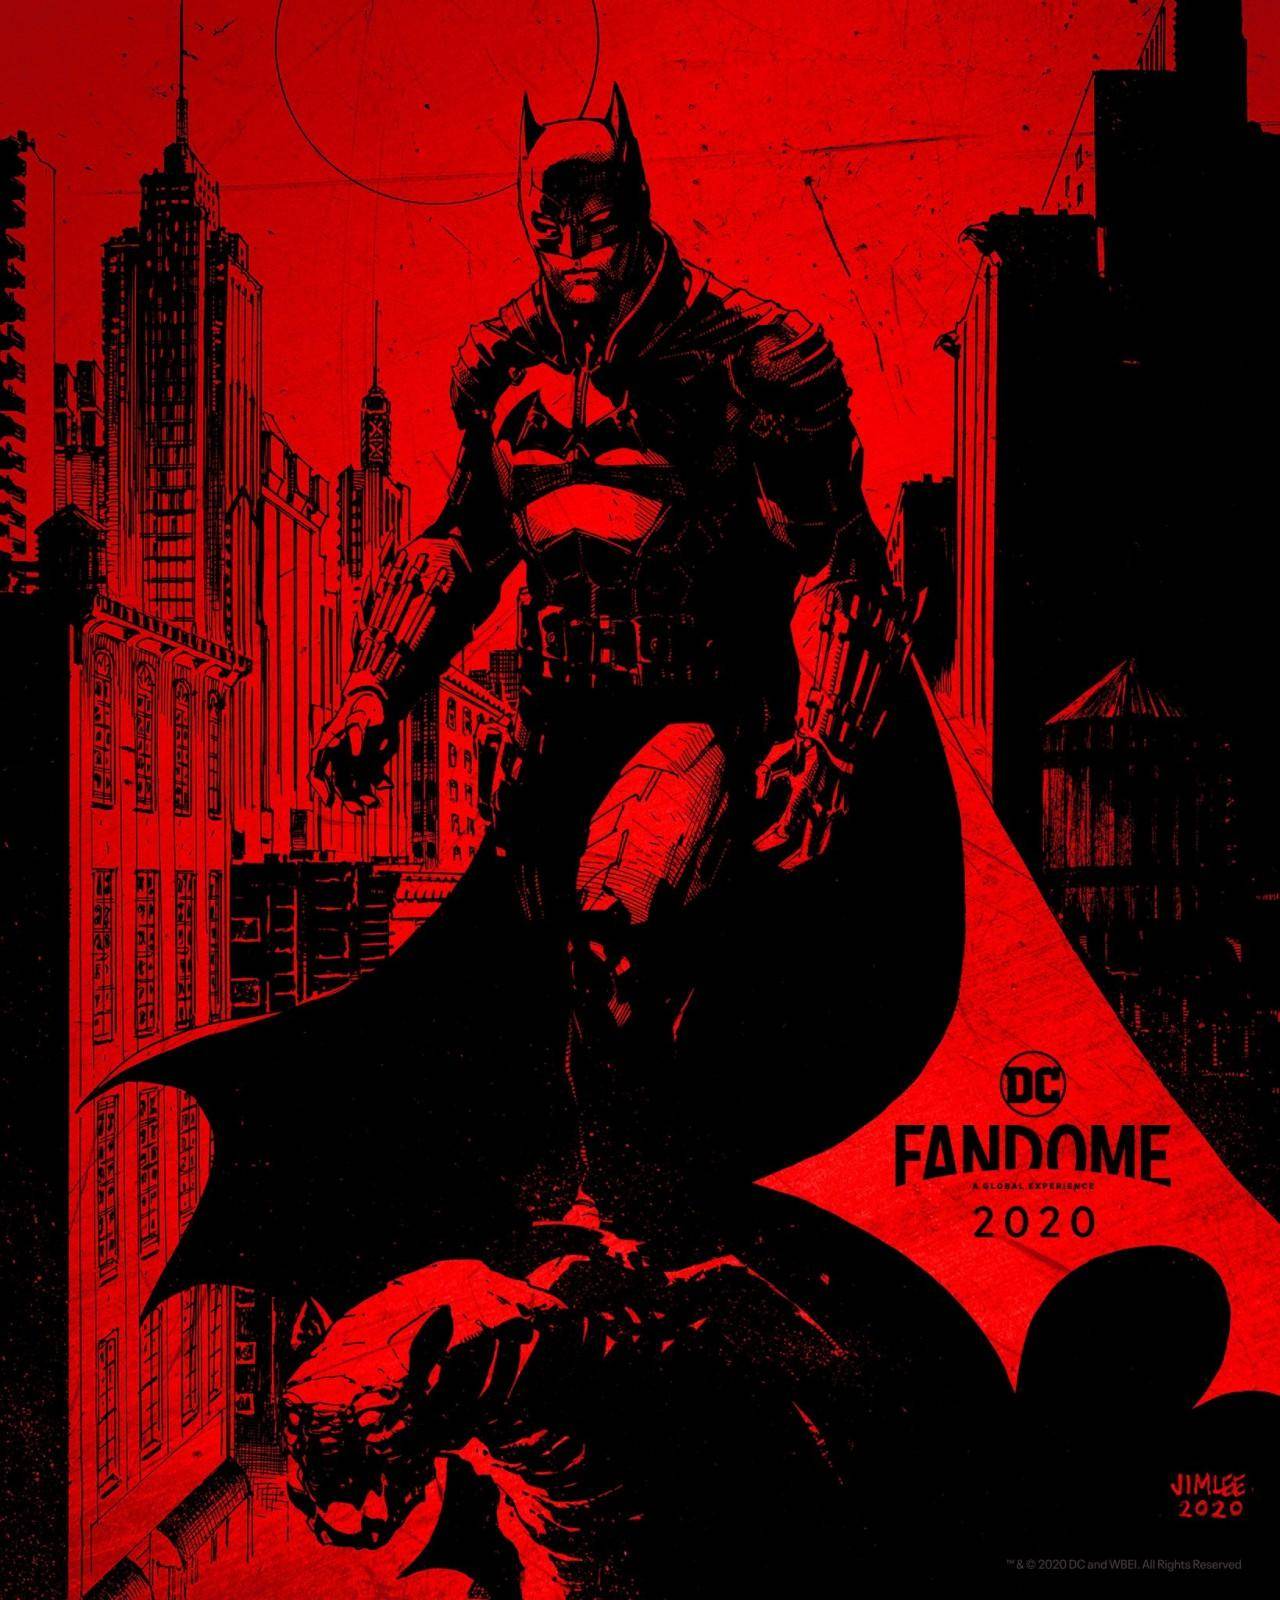 The Batman, DC Fandome, Jim Lee